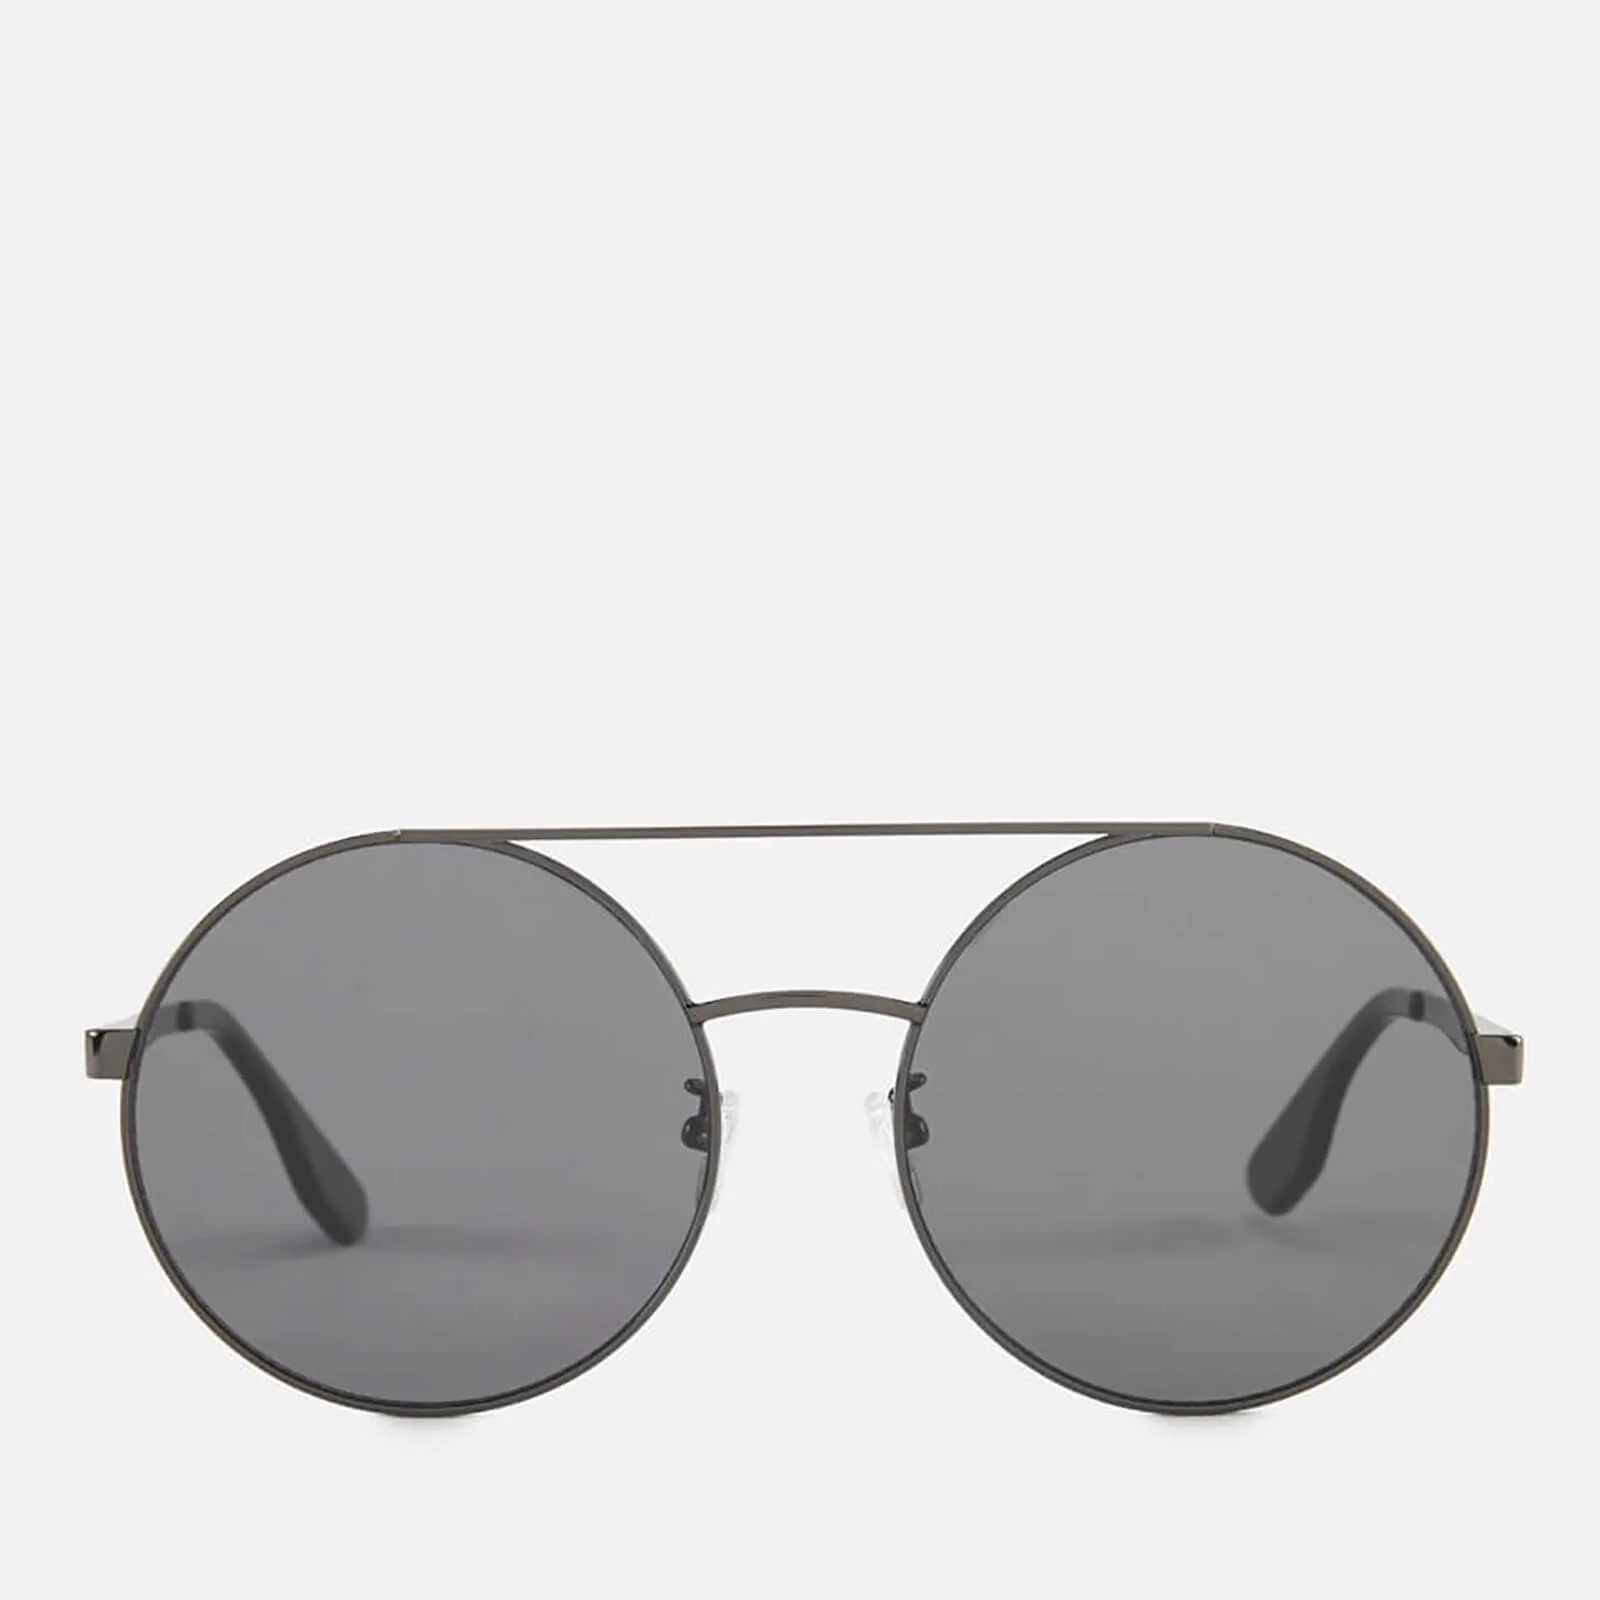 McQ Alexander McQueen Women's Round Metal Frame Sunglasses - Black/Black Image 1